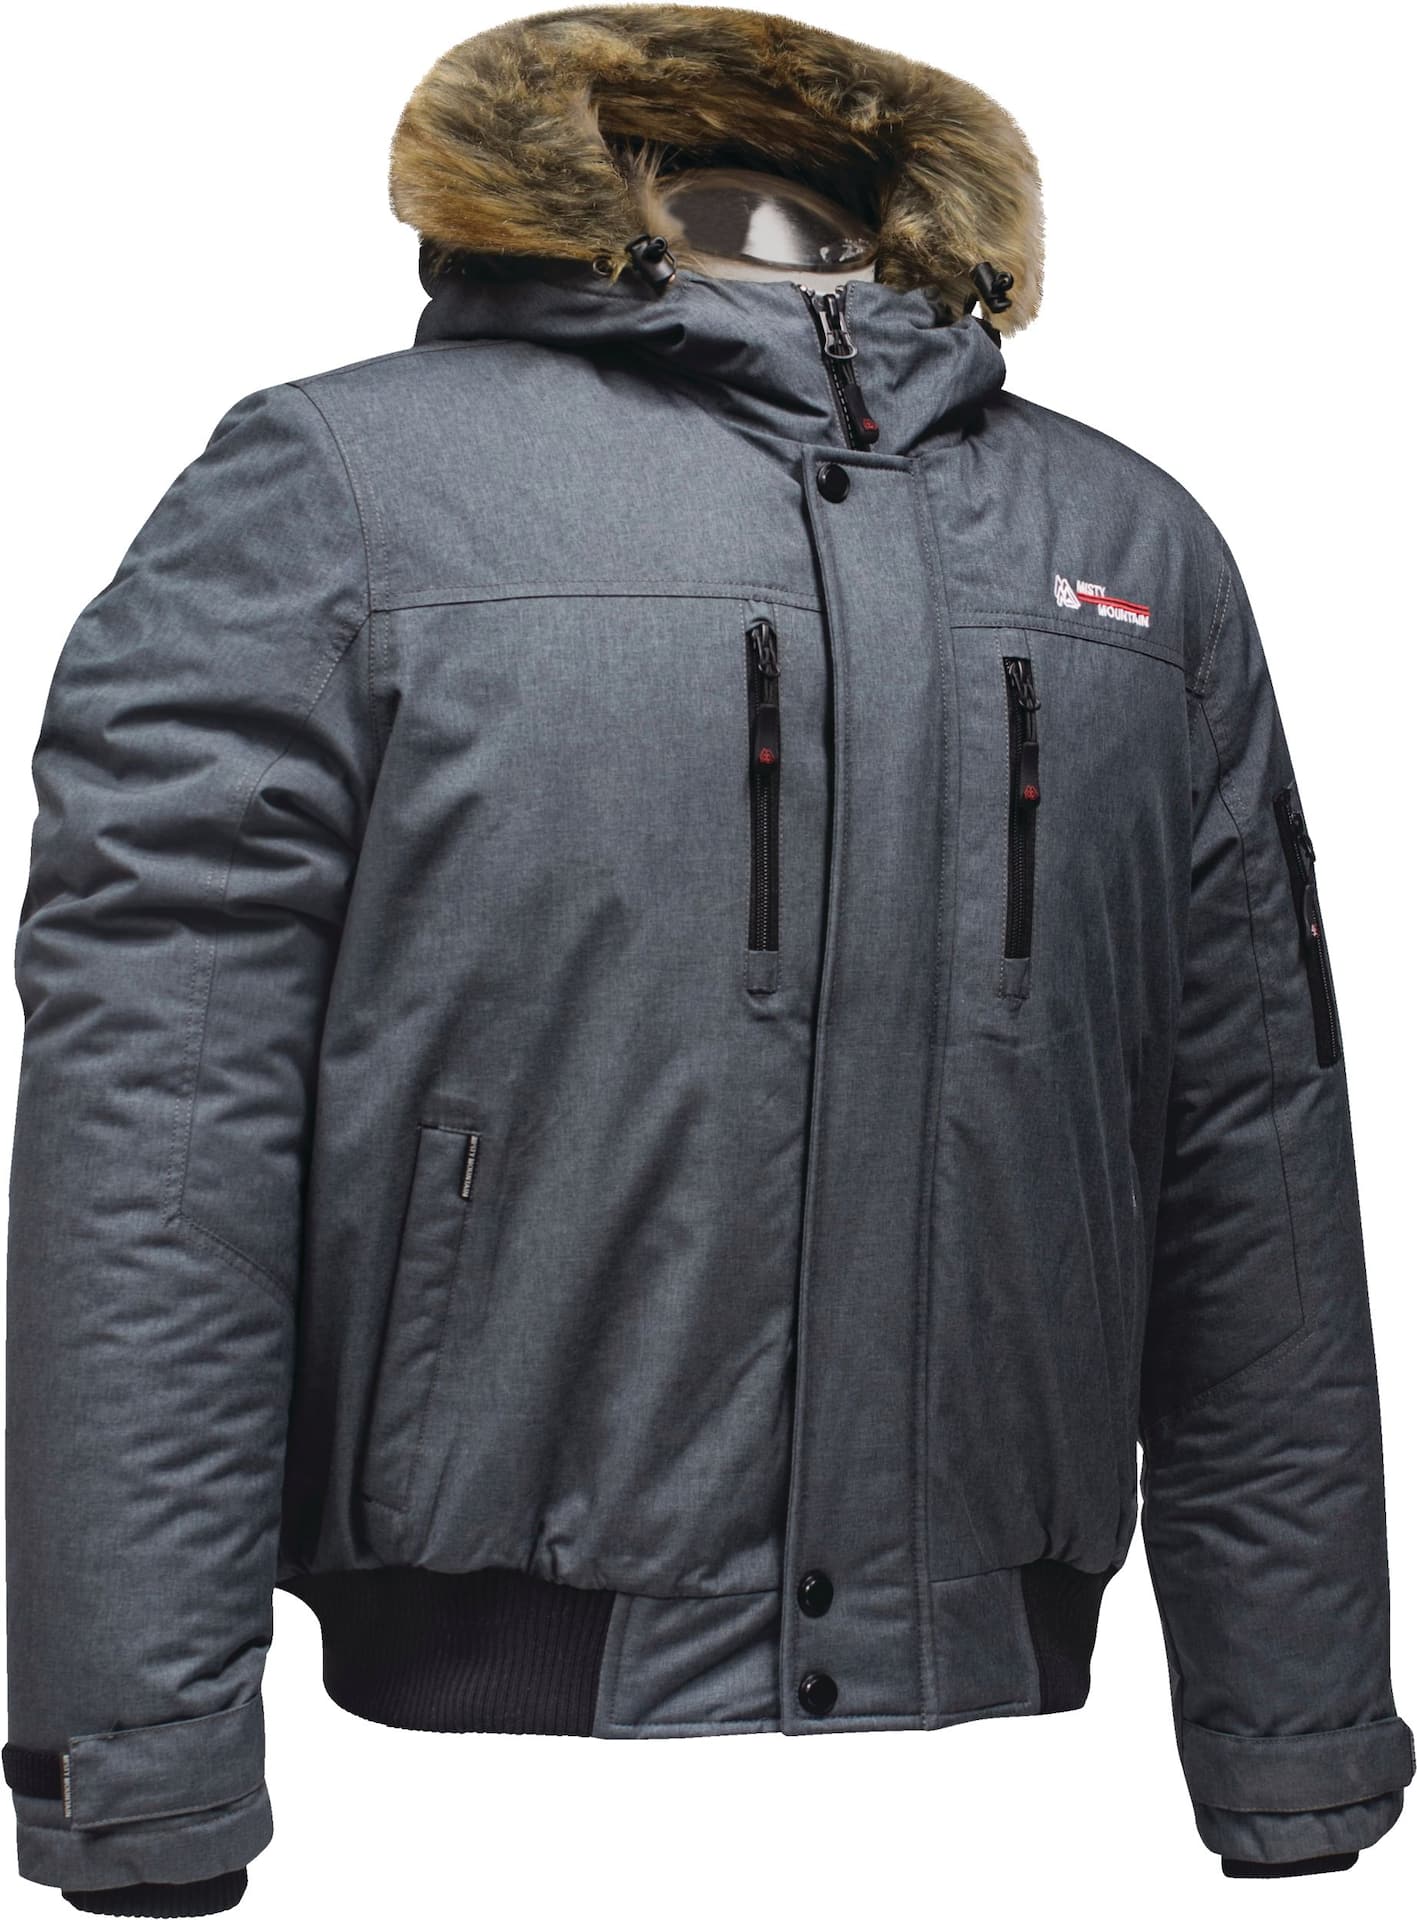 Misty Mountain Men's BlackIce Hooded Winter Parka Style Bomber Jacket  Insulated Waterproof